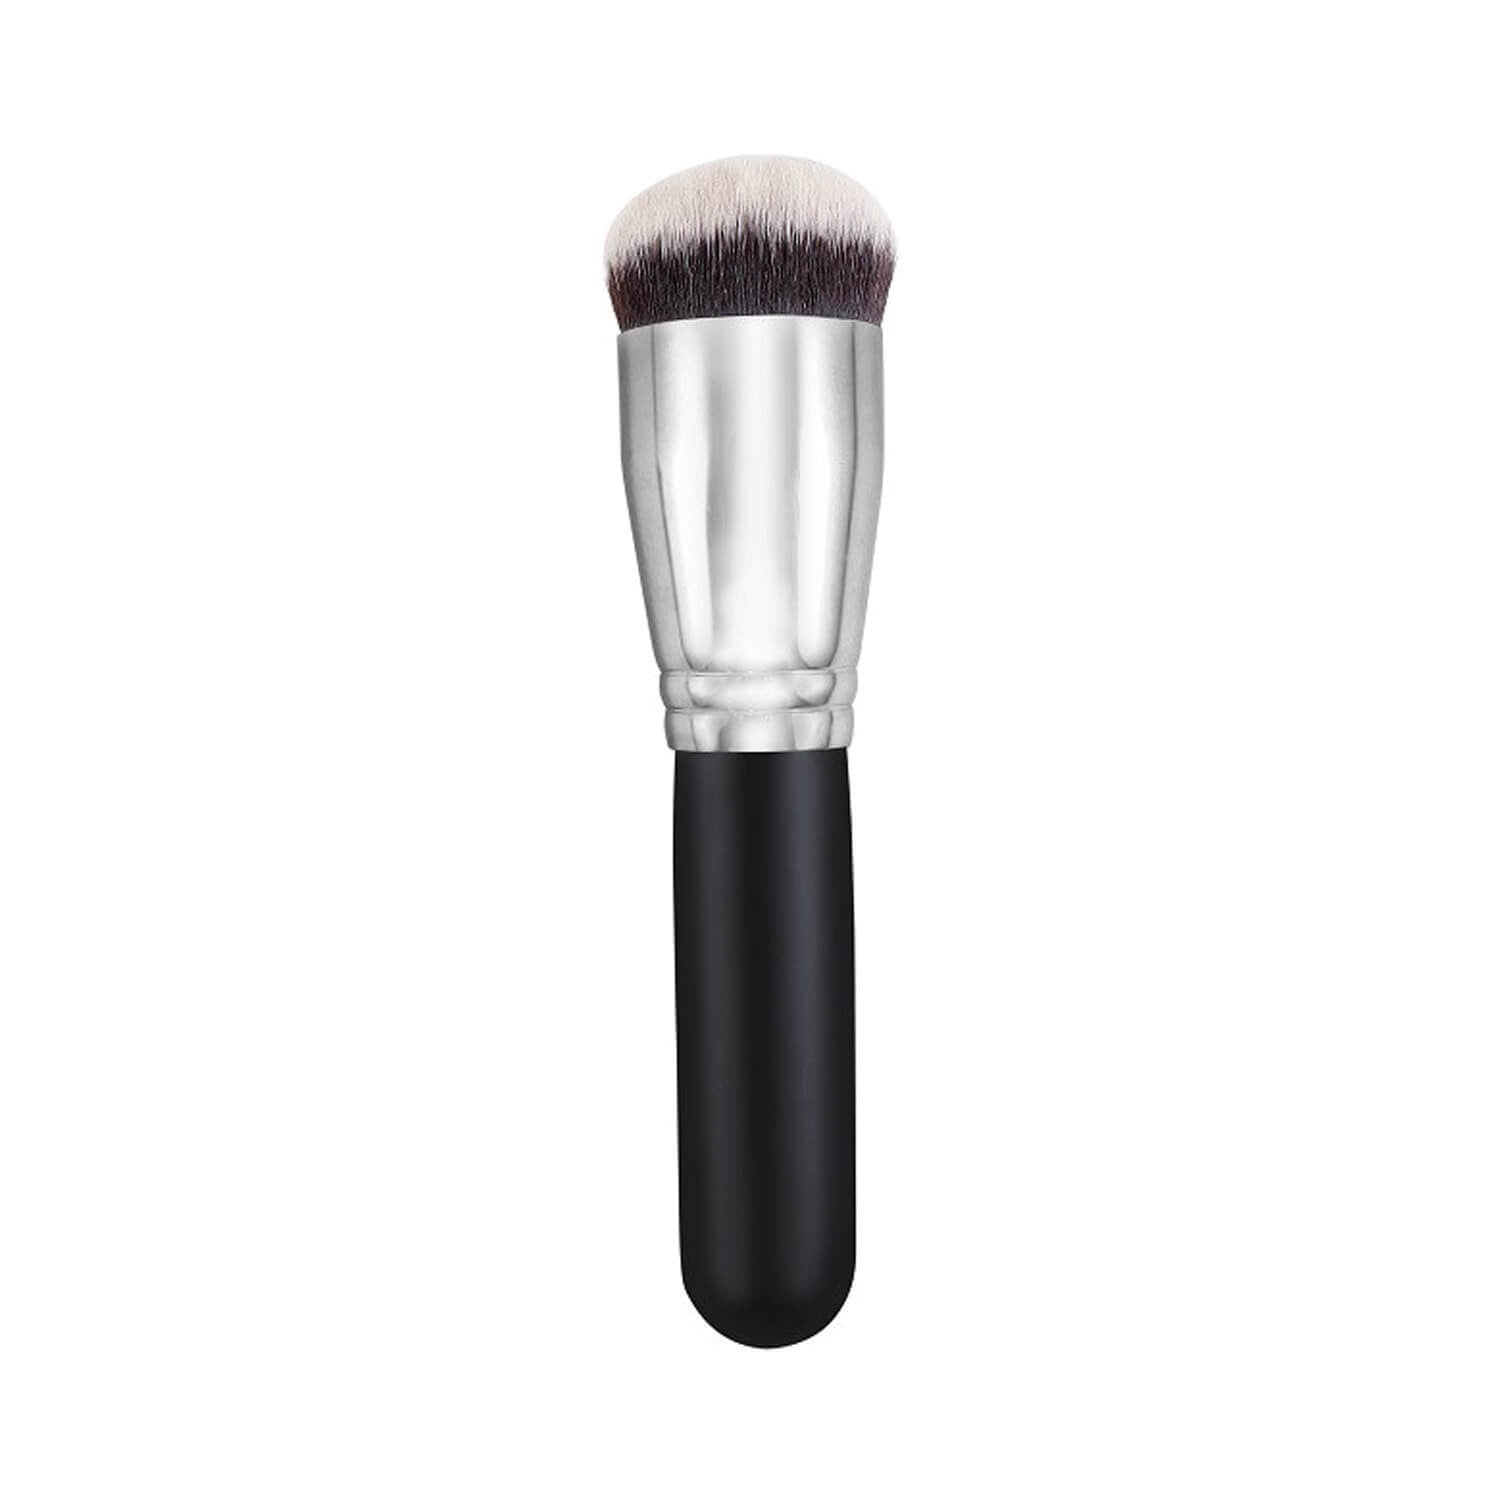 Morphe Cosmetics M444 Deluxe Definition Buffer Brush